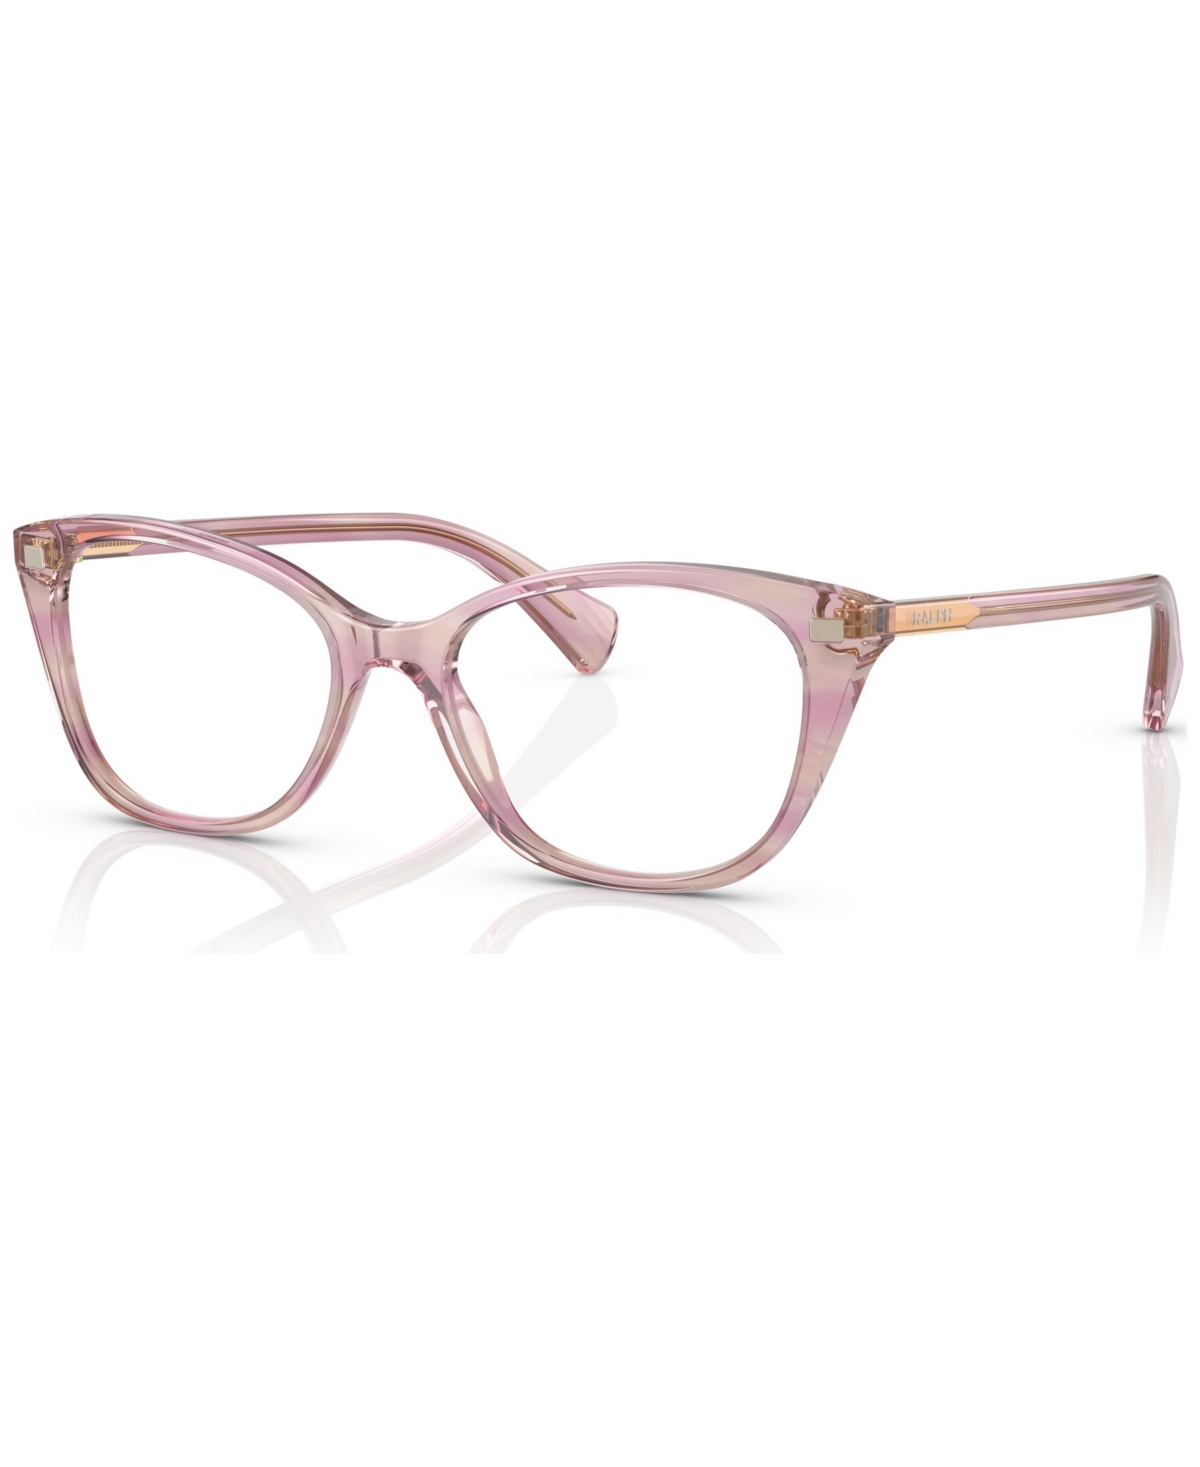 Women's Pillow Eyeglasses, RA714653-o - Pink